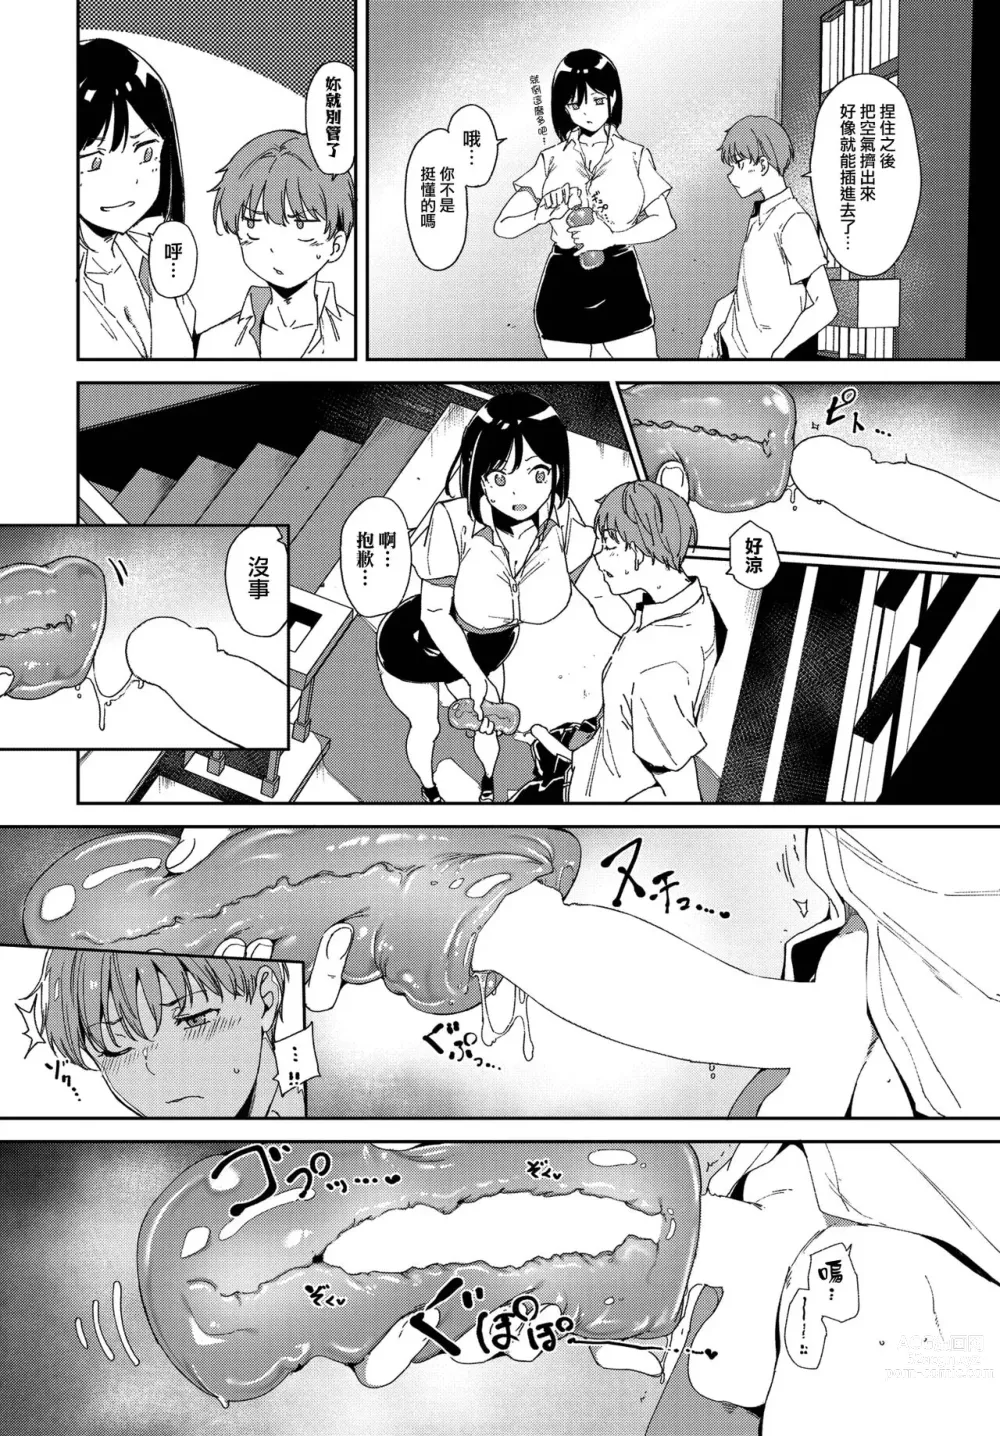 Page 3 of manga Routine 2